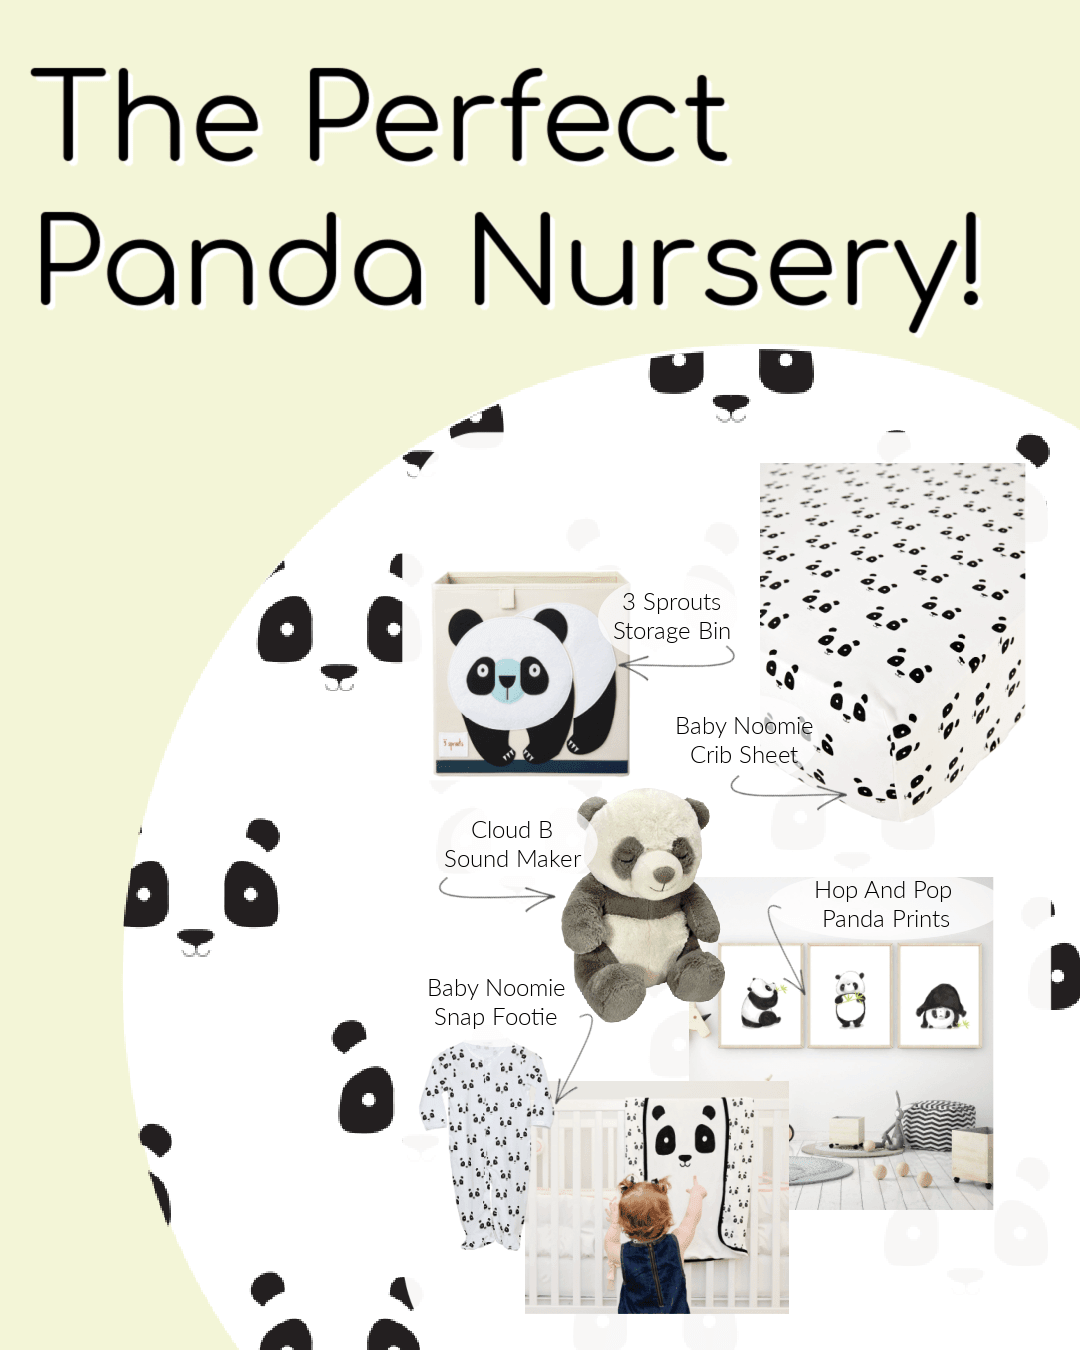 The Perfect Panda Nursery!